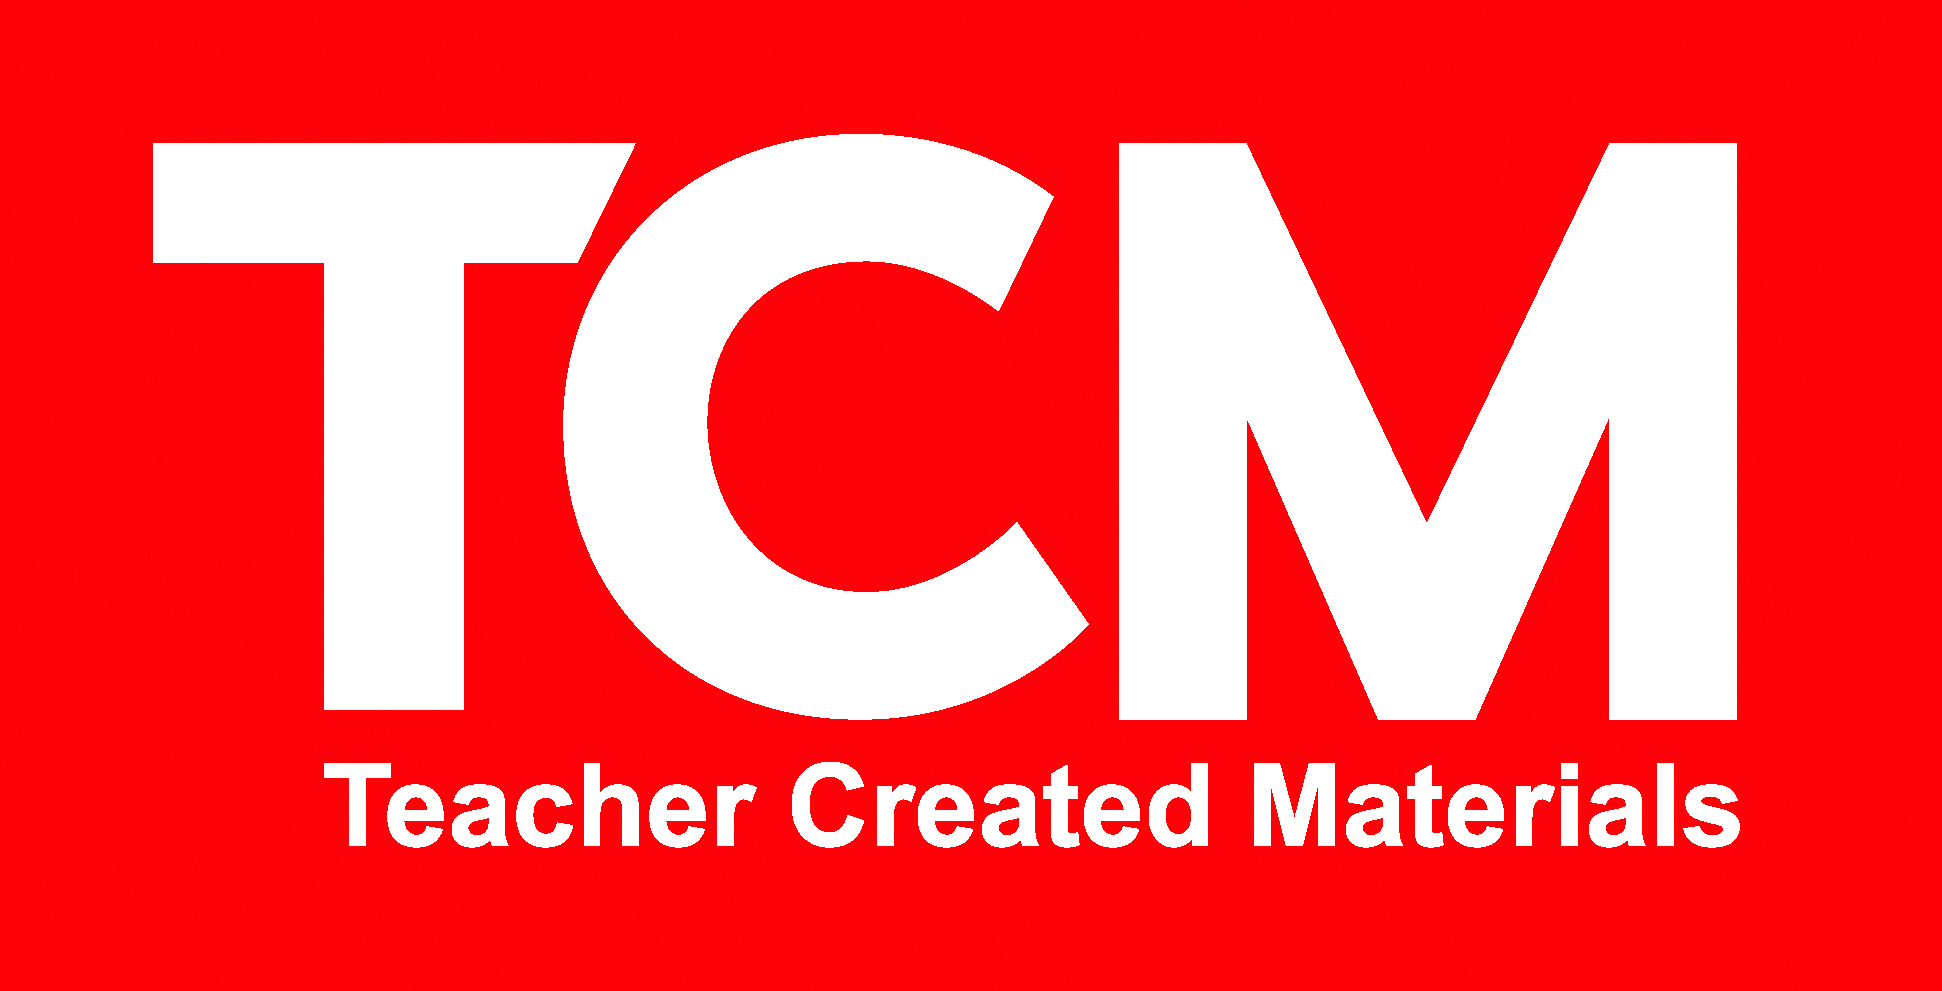 Teacher Created Materials logo